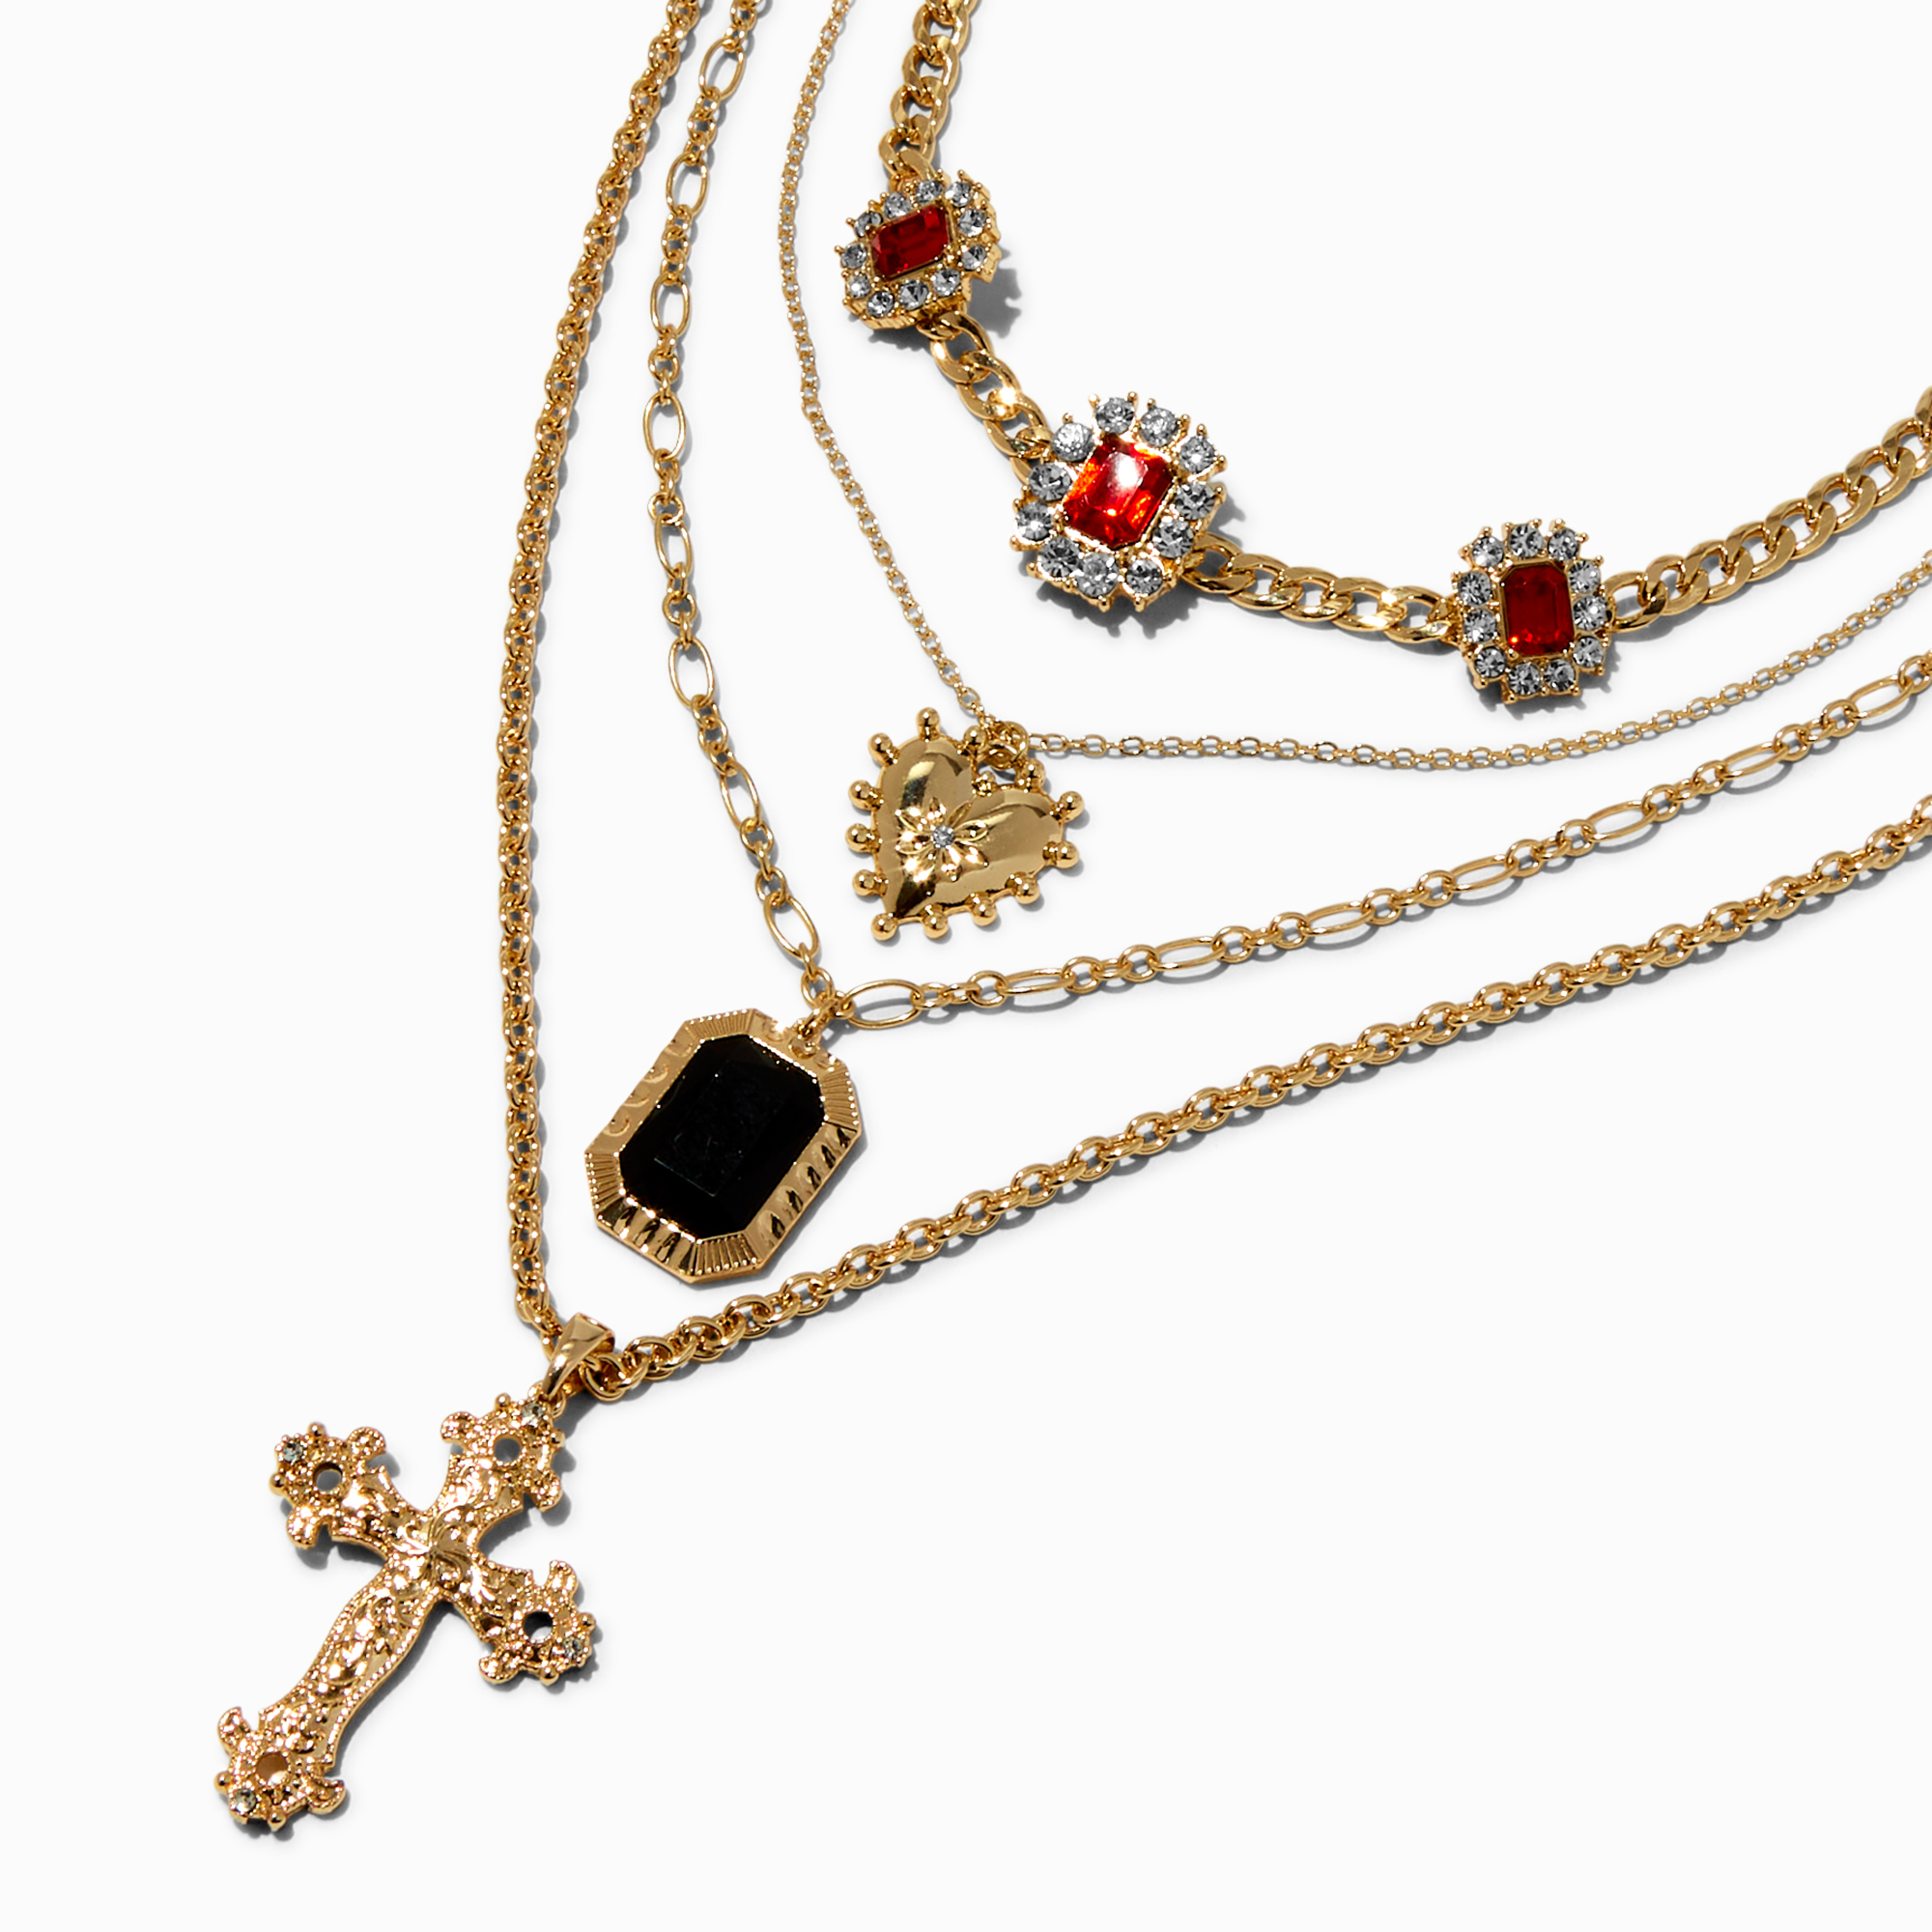 cross jewelry